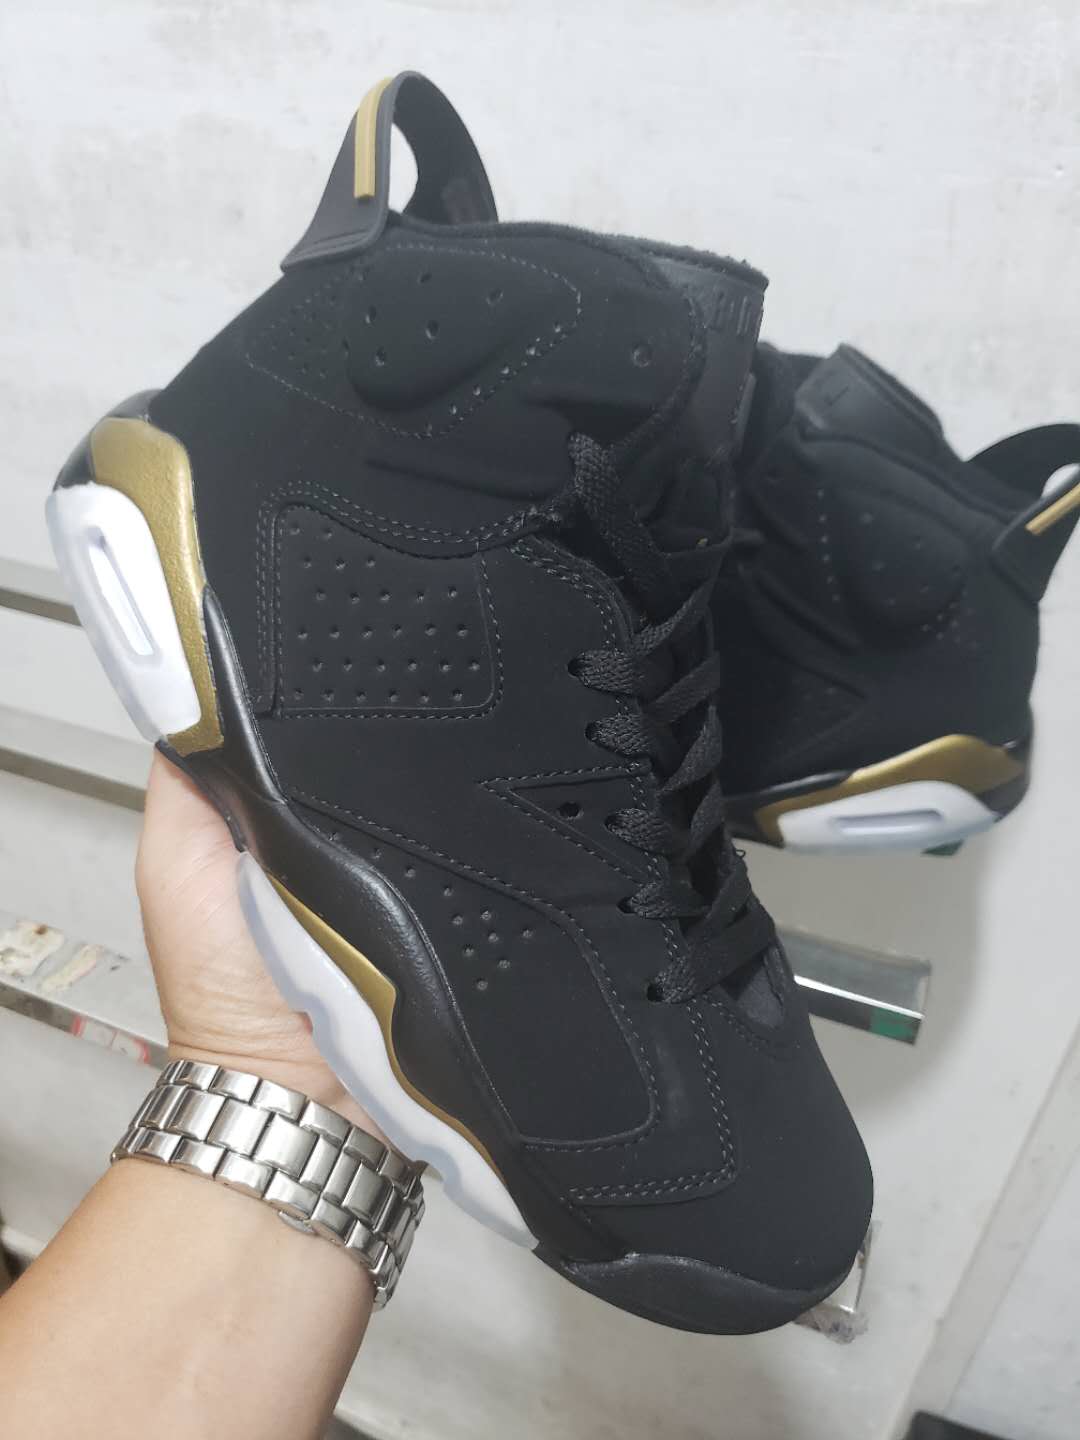 Air Jordan 6 Retro Black Gold 2019